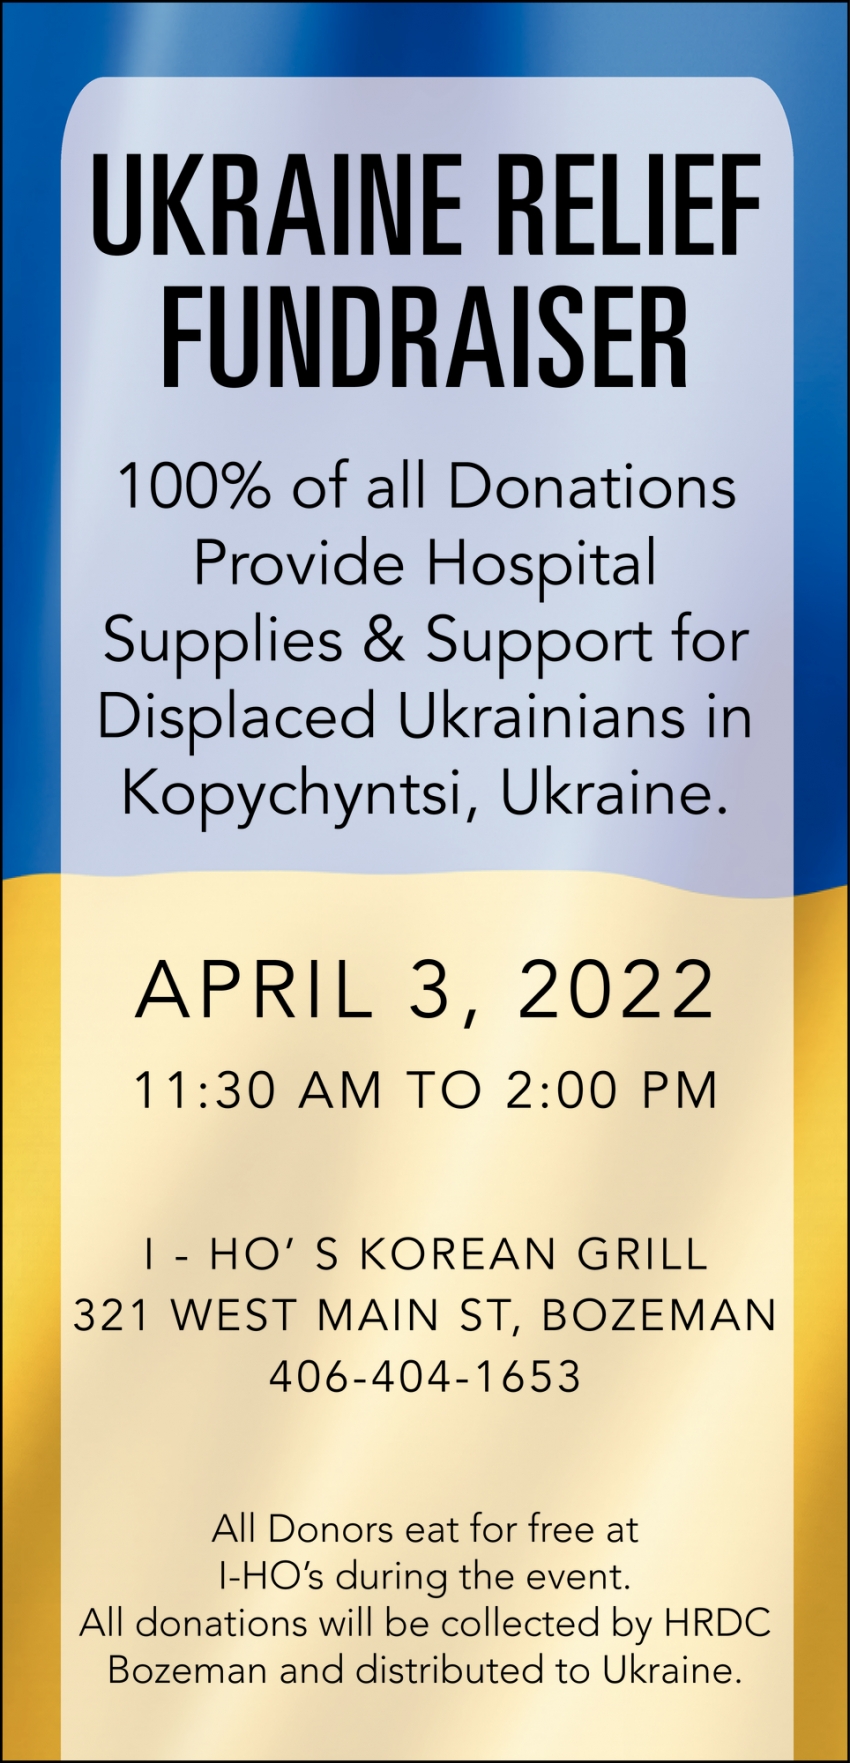 Ukraine Relief Fundraiser